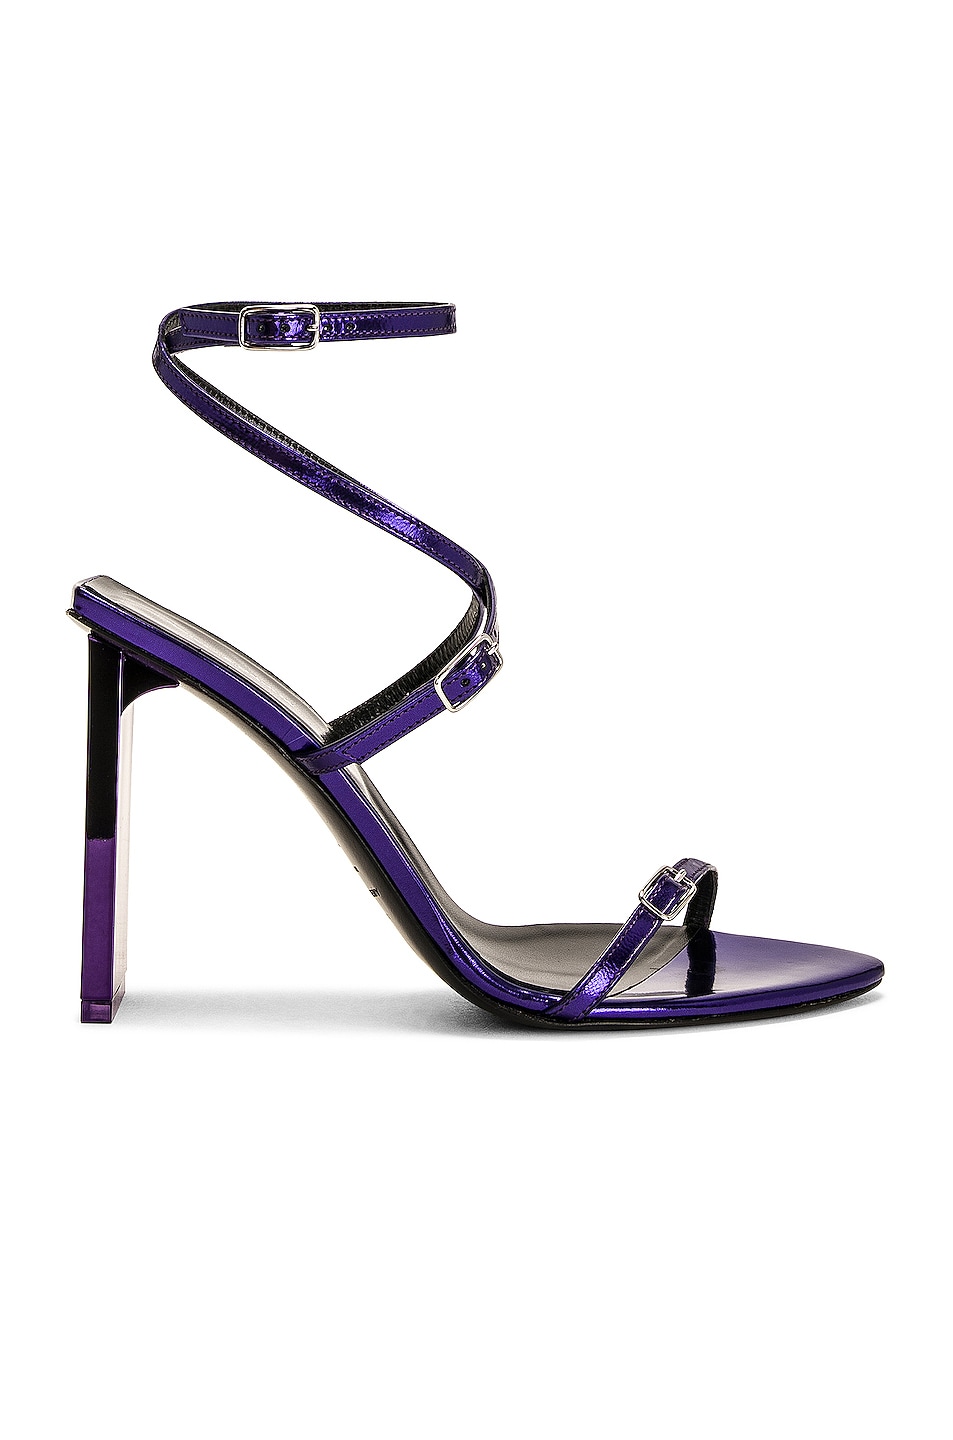 Image 1 of Arielle Baron Cattiva 95 Heel in Blue Violet Metallic